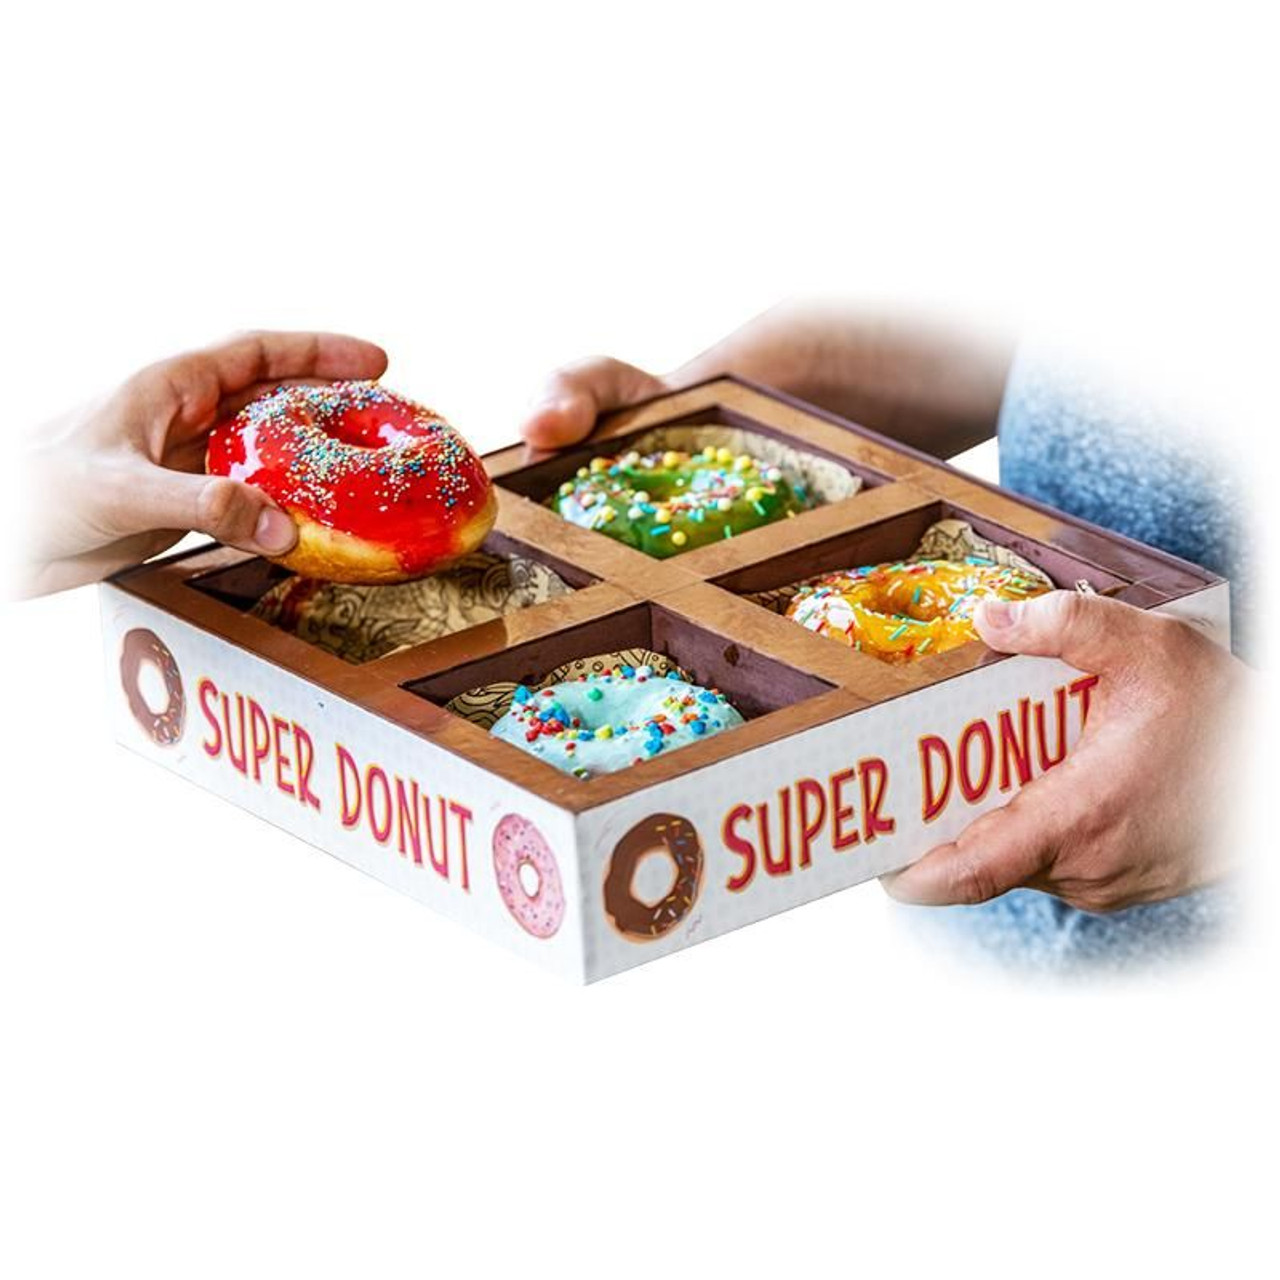 Super Donut's Tora Magic Trick Appearance Box